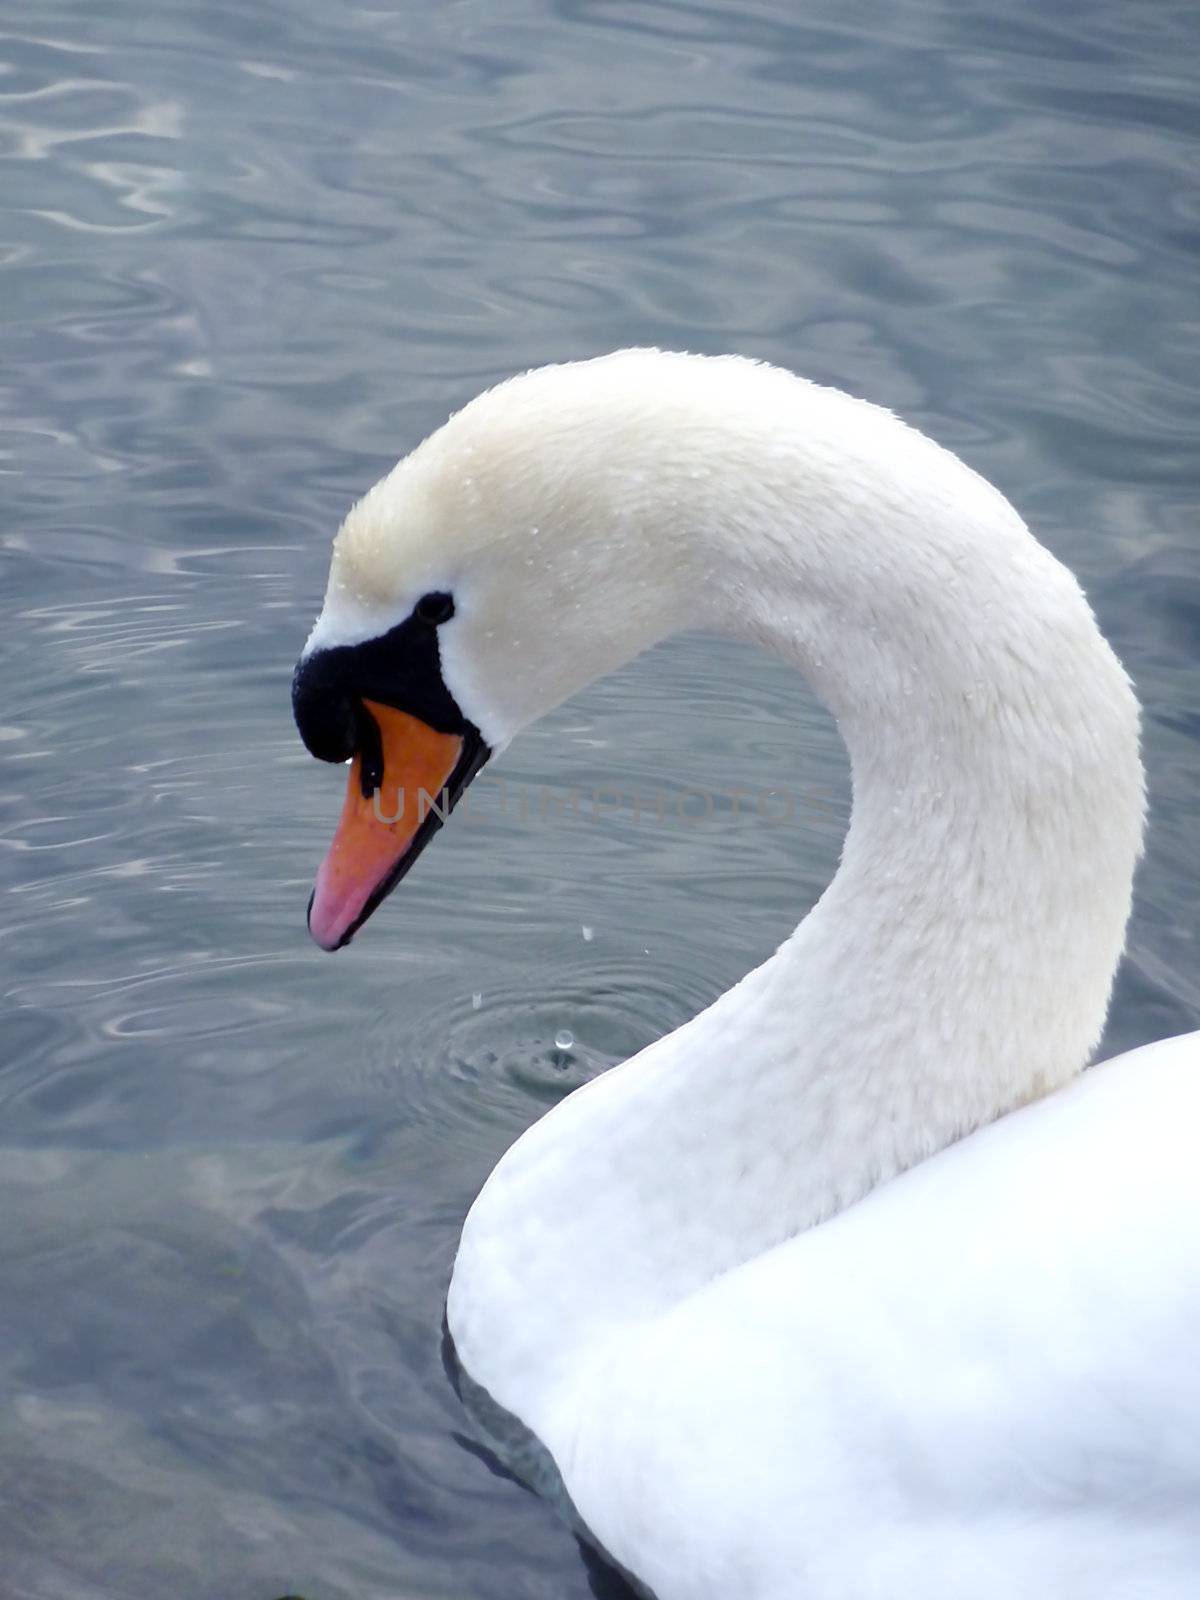 Head of a beautiful swan on water